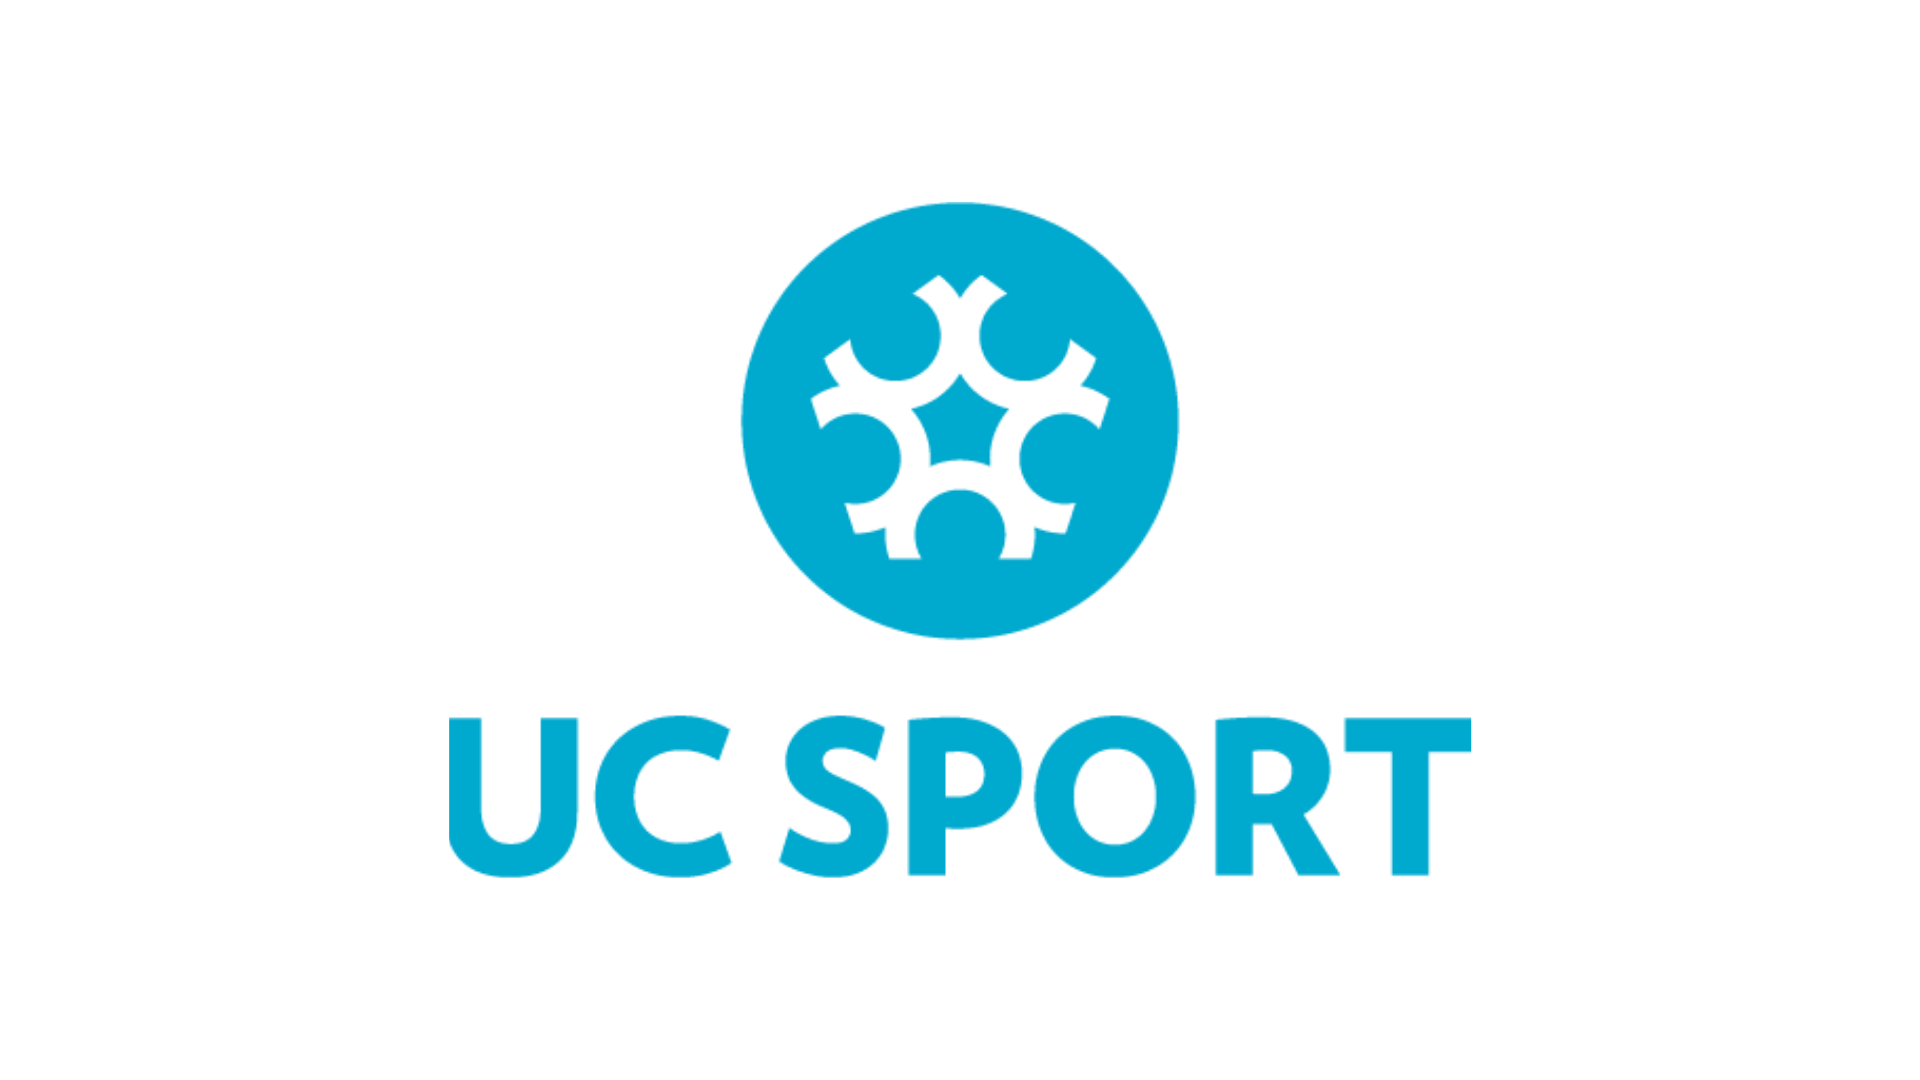 A light blue logo for UC Sport. UC Sport is written below a motif for the University of Canberra.